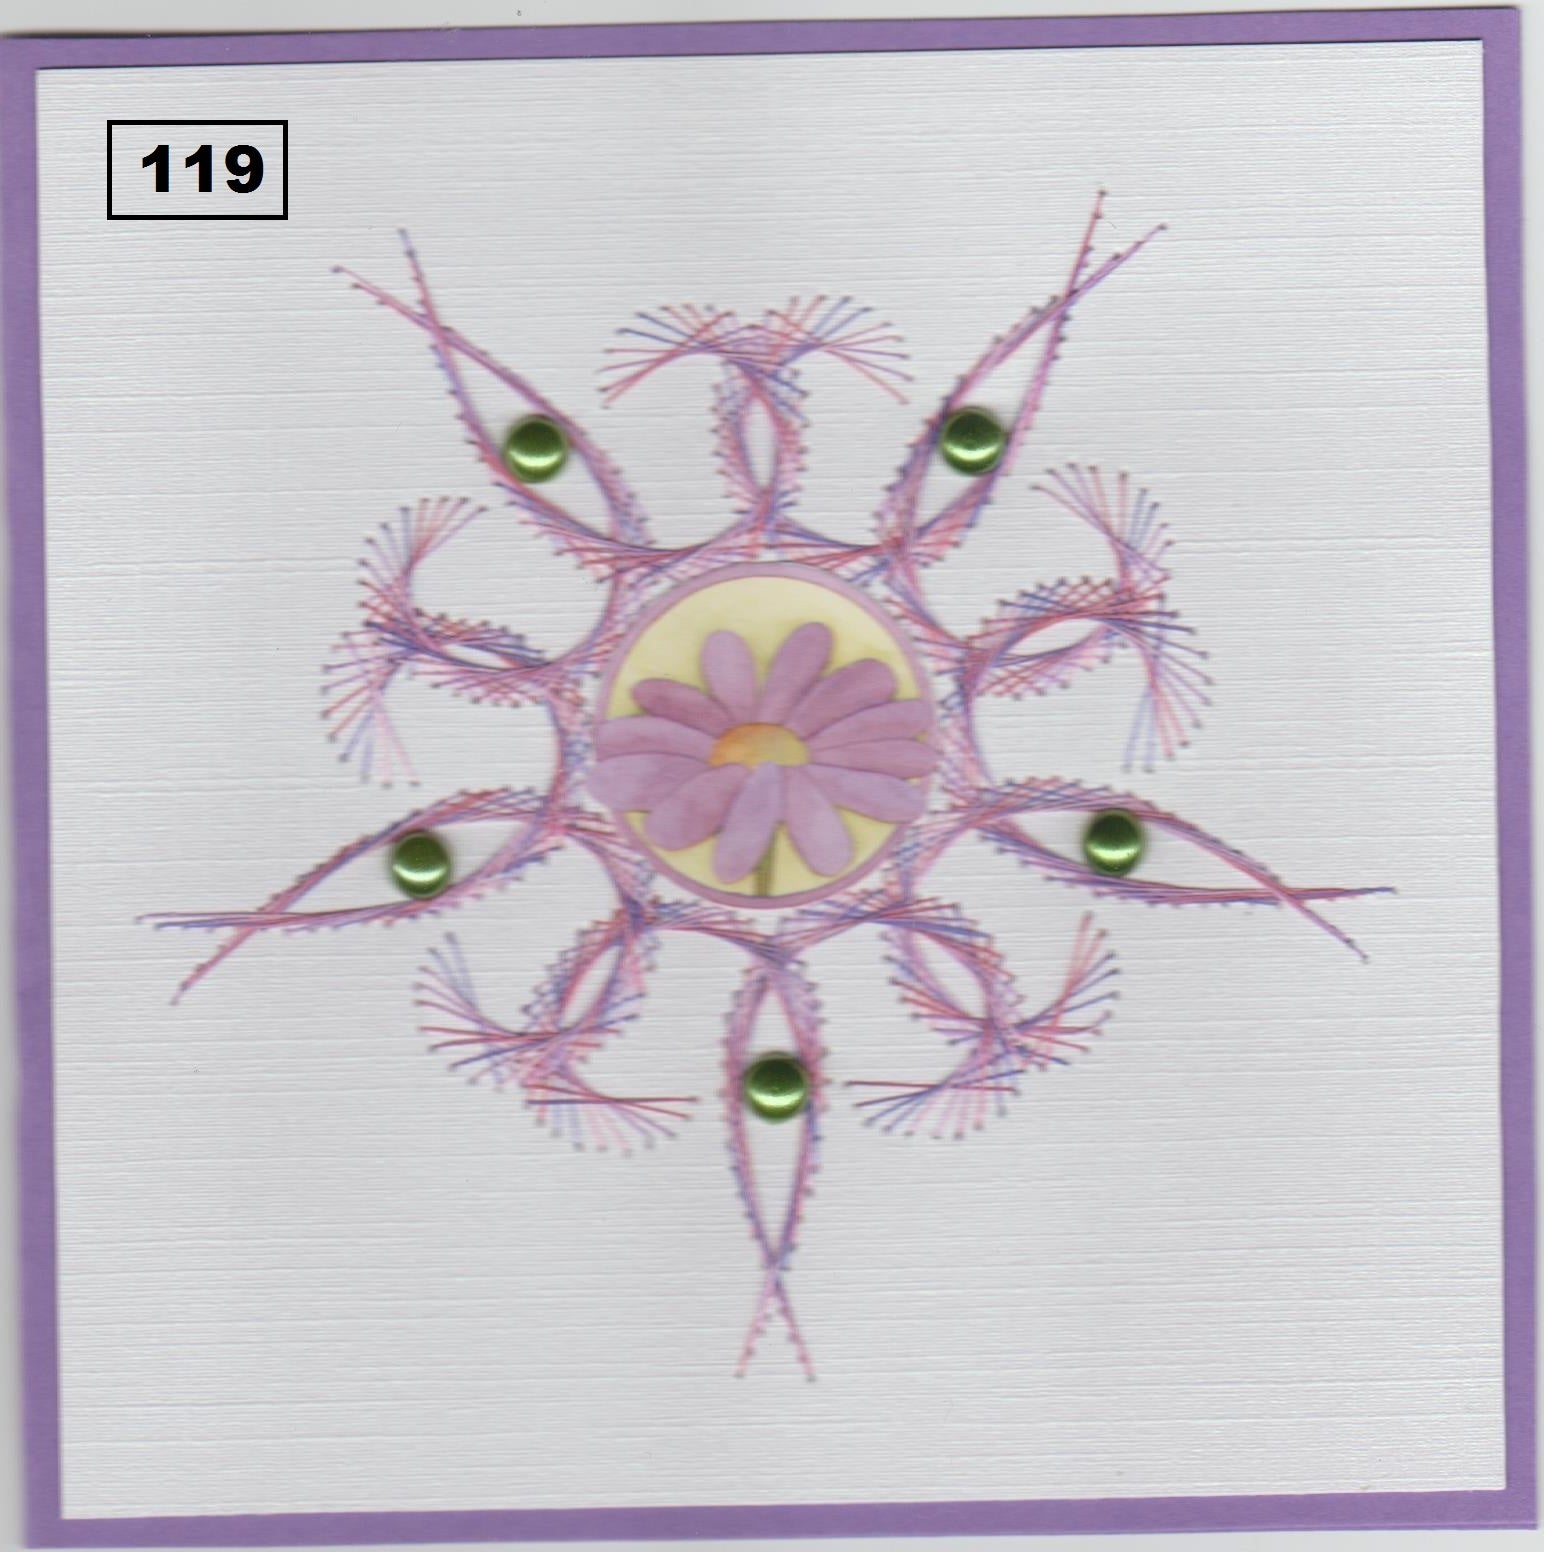 Laura's Design Digital Embroidery Pattern - Curling Flower